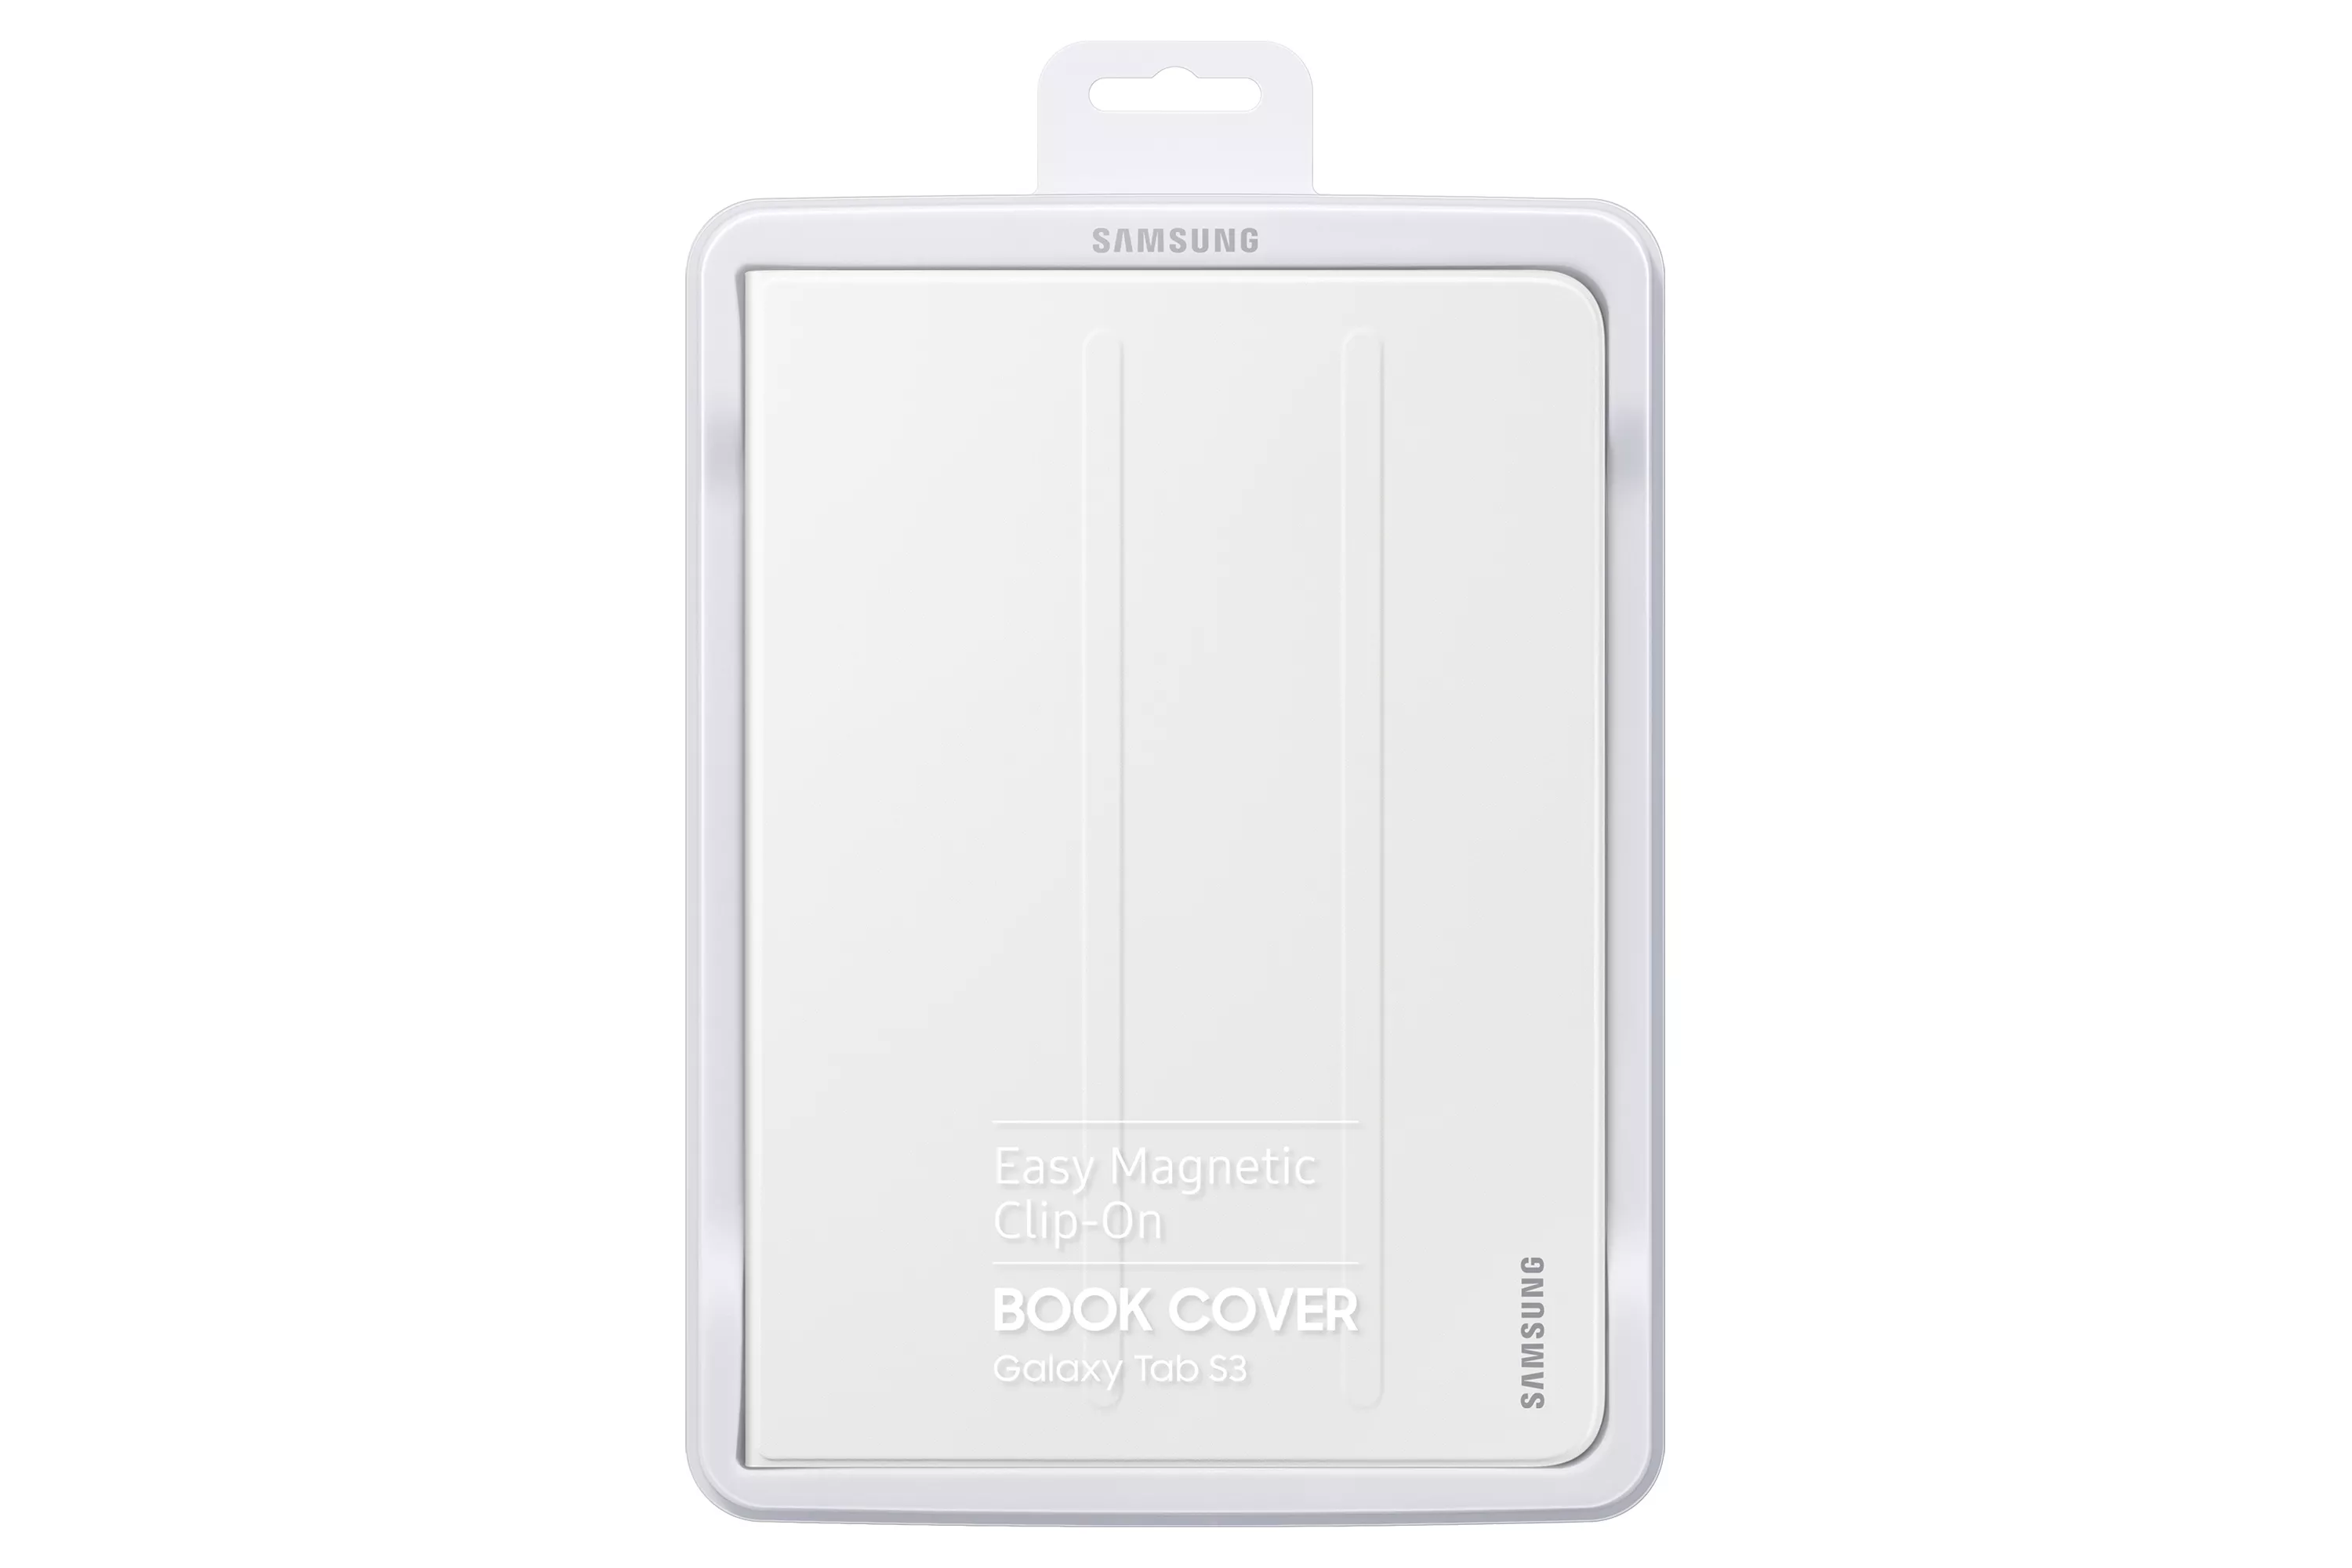 Vente SAMSUNG Book Cover blanc pour TAB S3 Samsung au meilleur prix - visuel 6